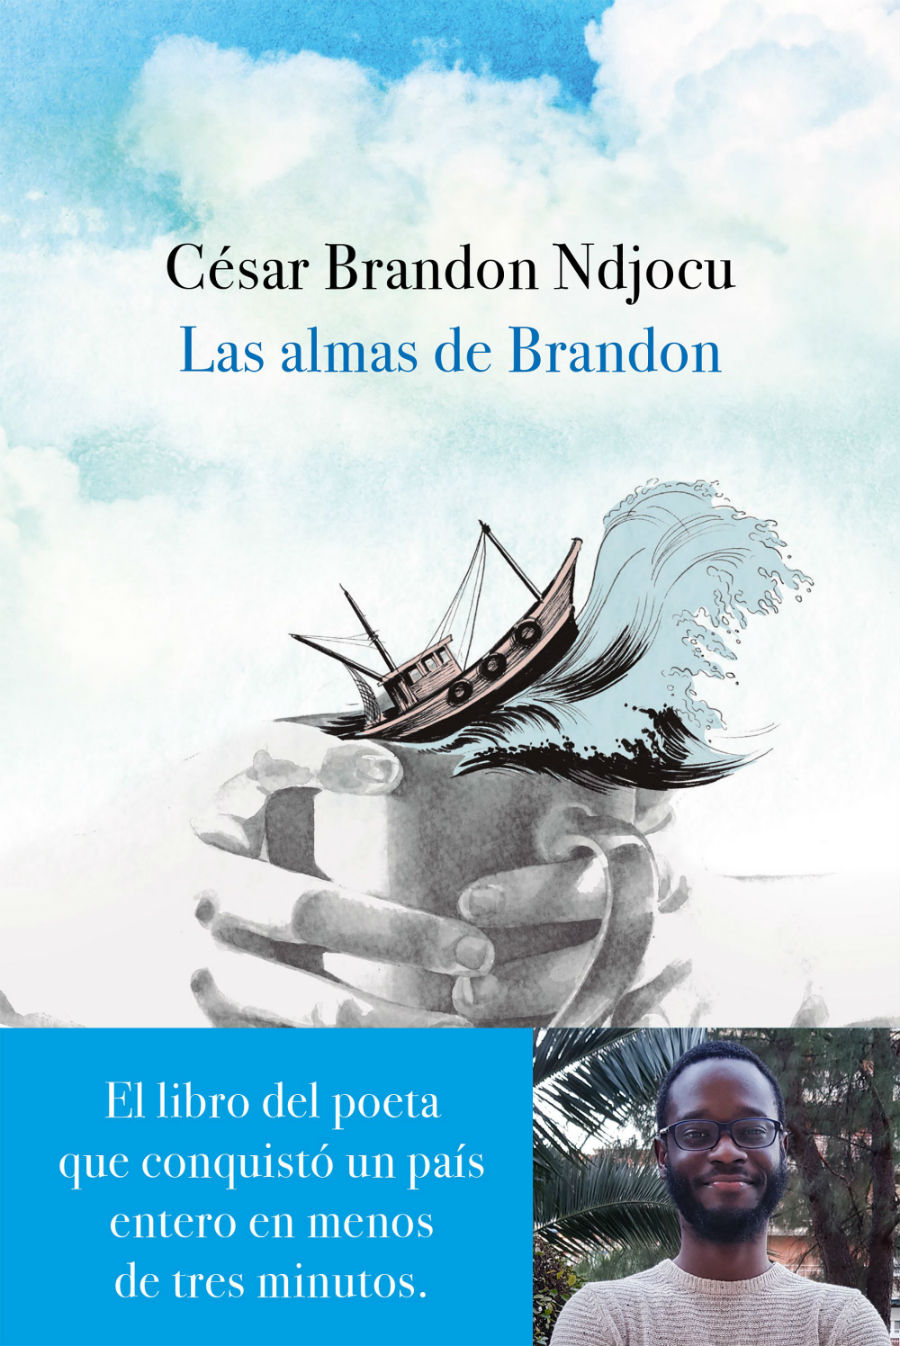 César Brandon